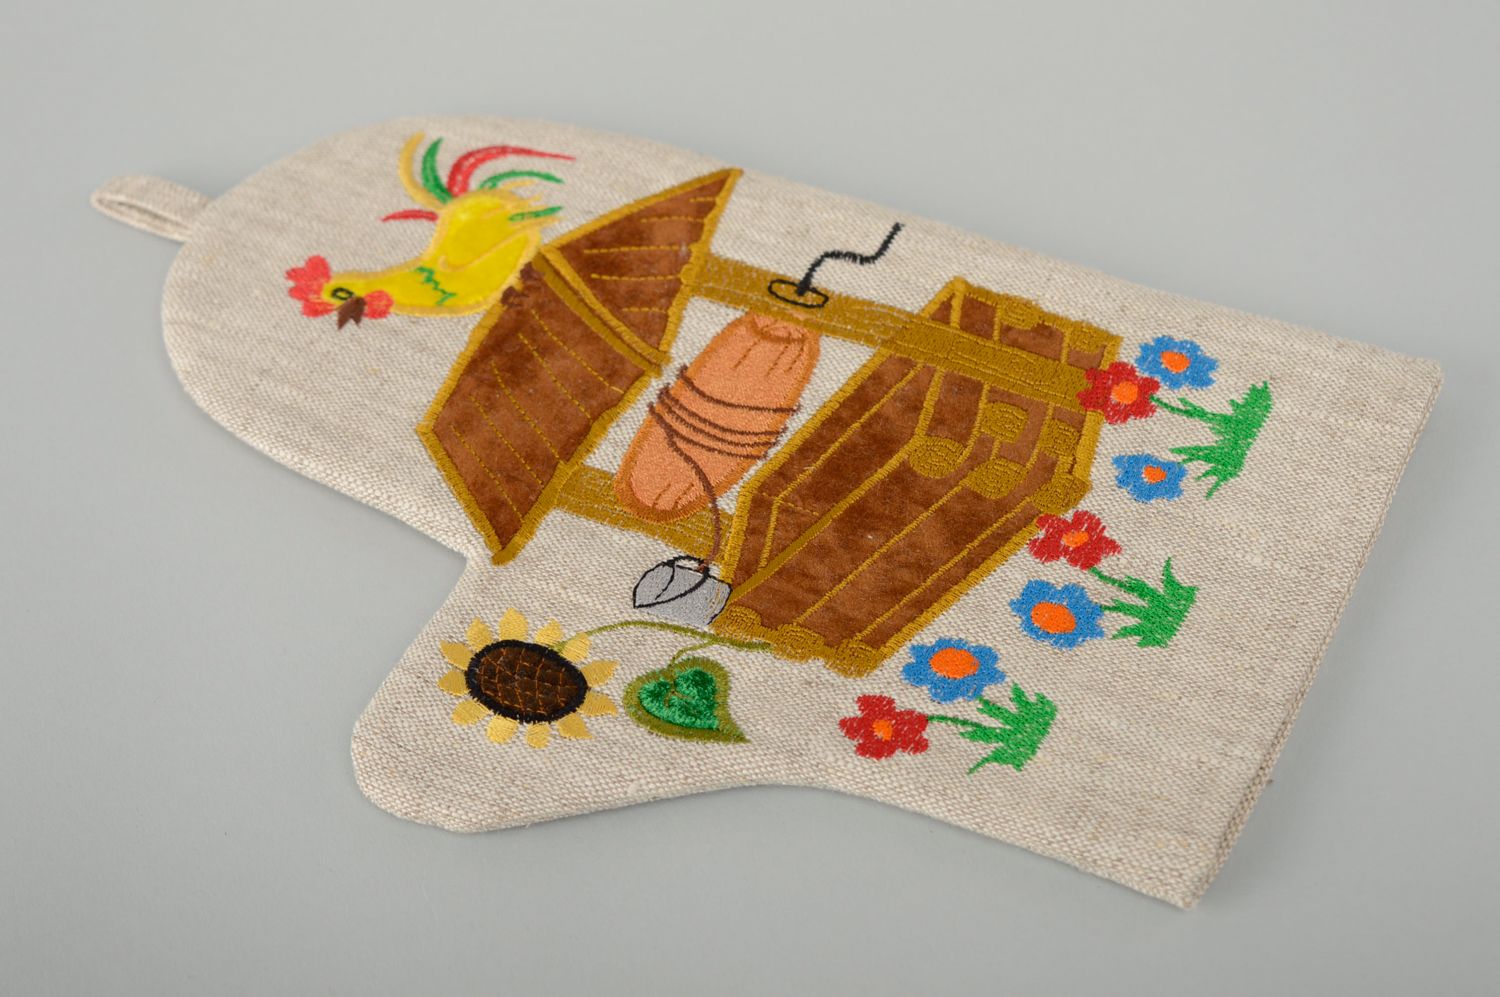 Decorative oven mitt with applique work photo 1